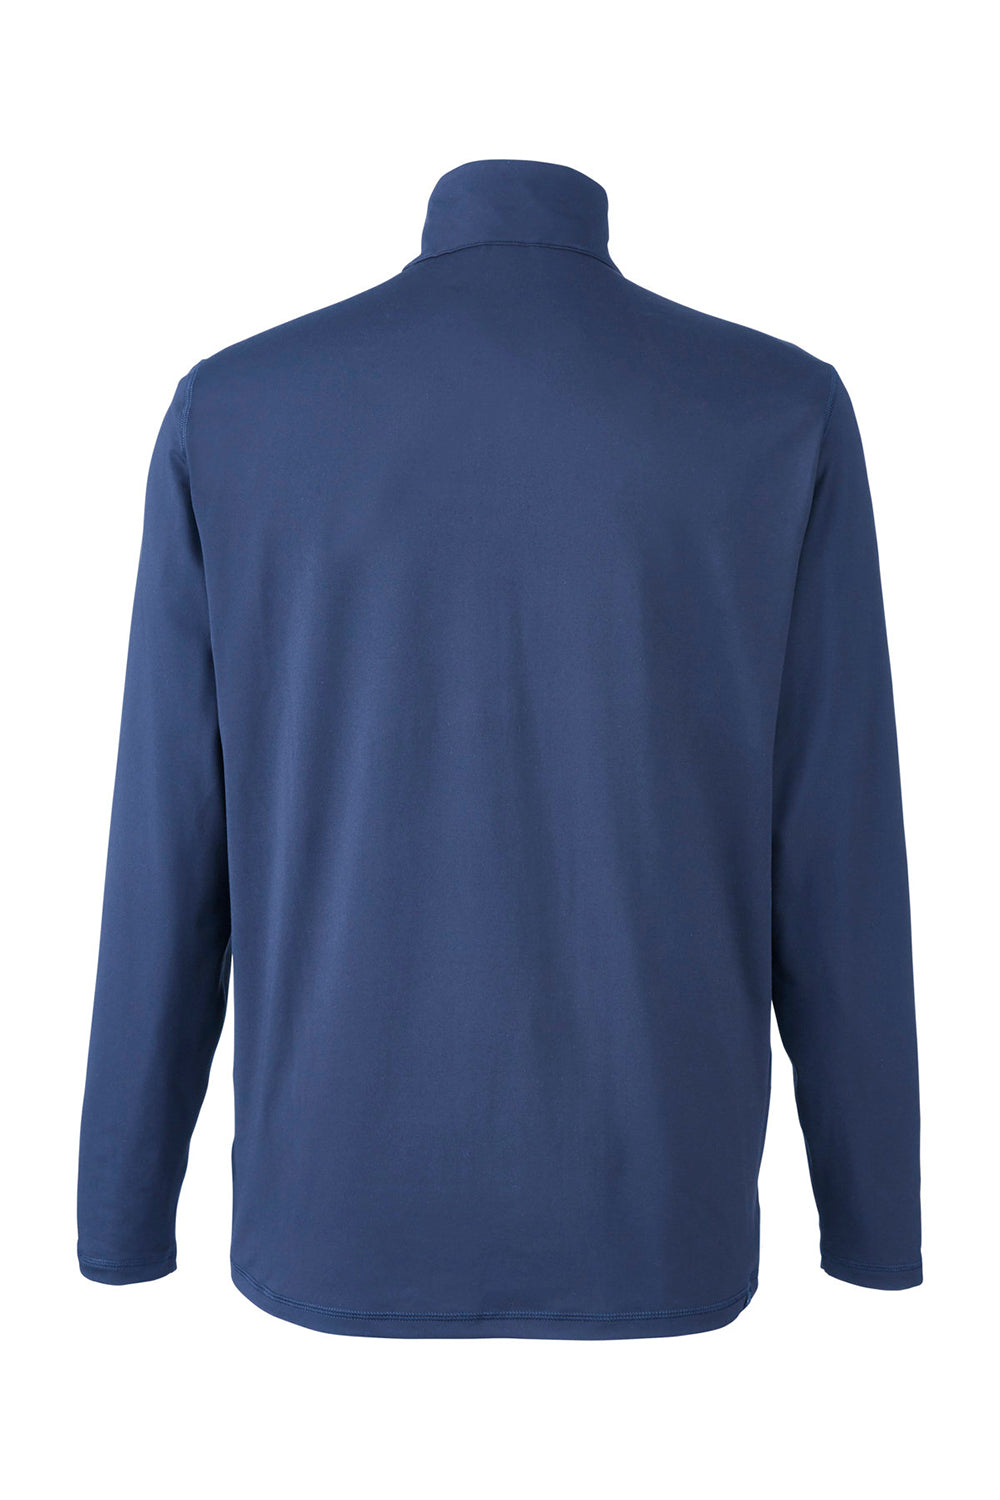 Puma 532016 Mens Cloudspun 1/4 Zip Sweatshirt Heather Navy Blue Flat Back